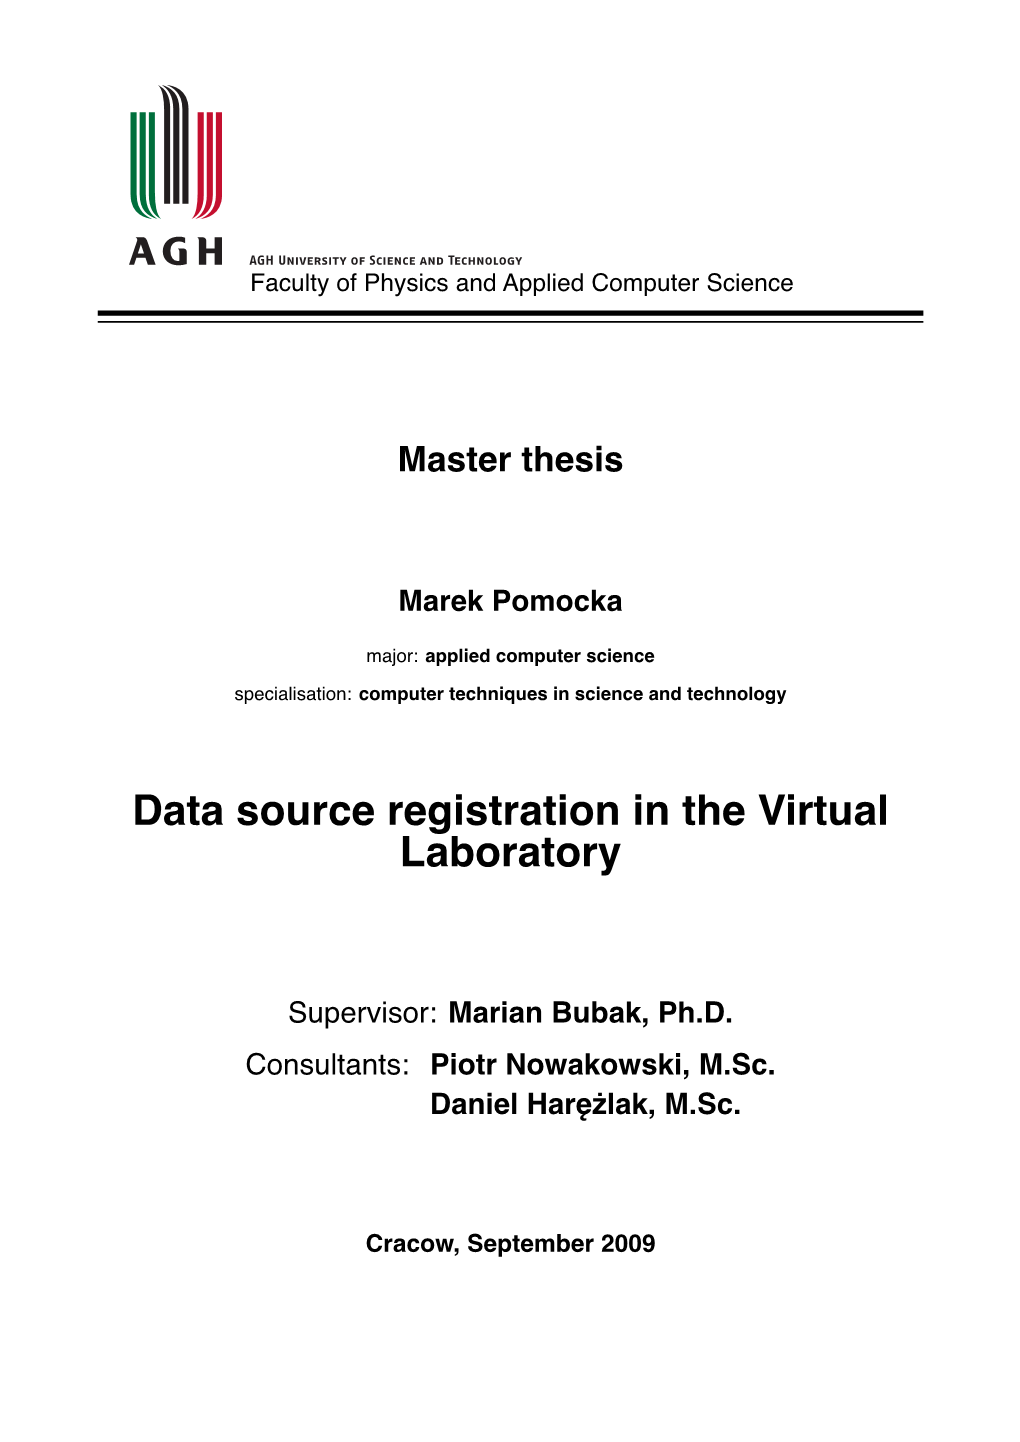 Data Source Registration in the Virtual Laboratory